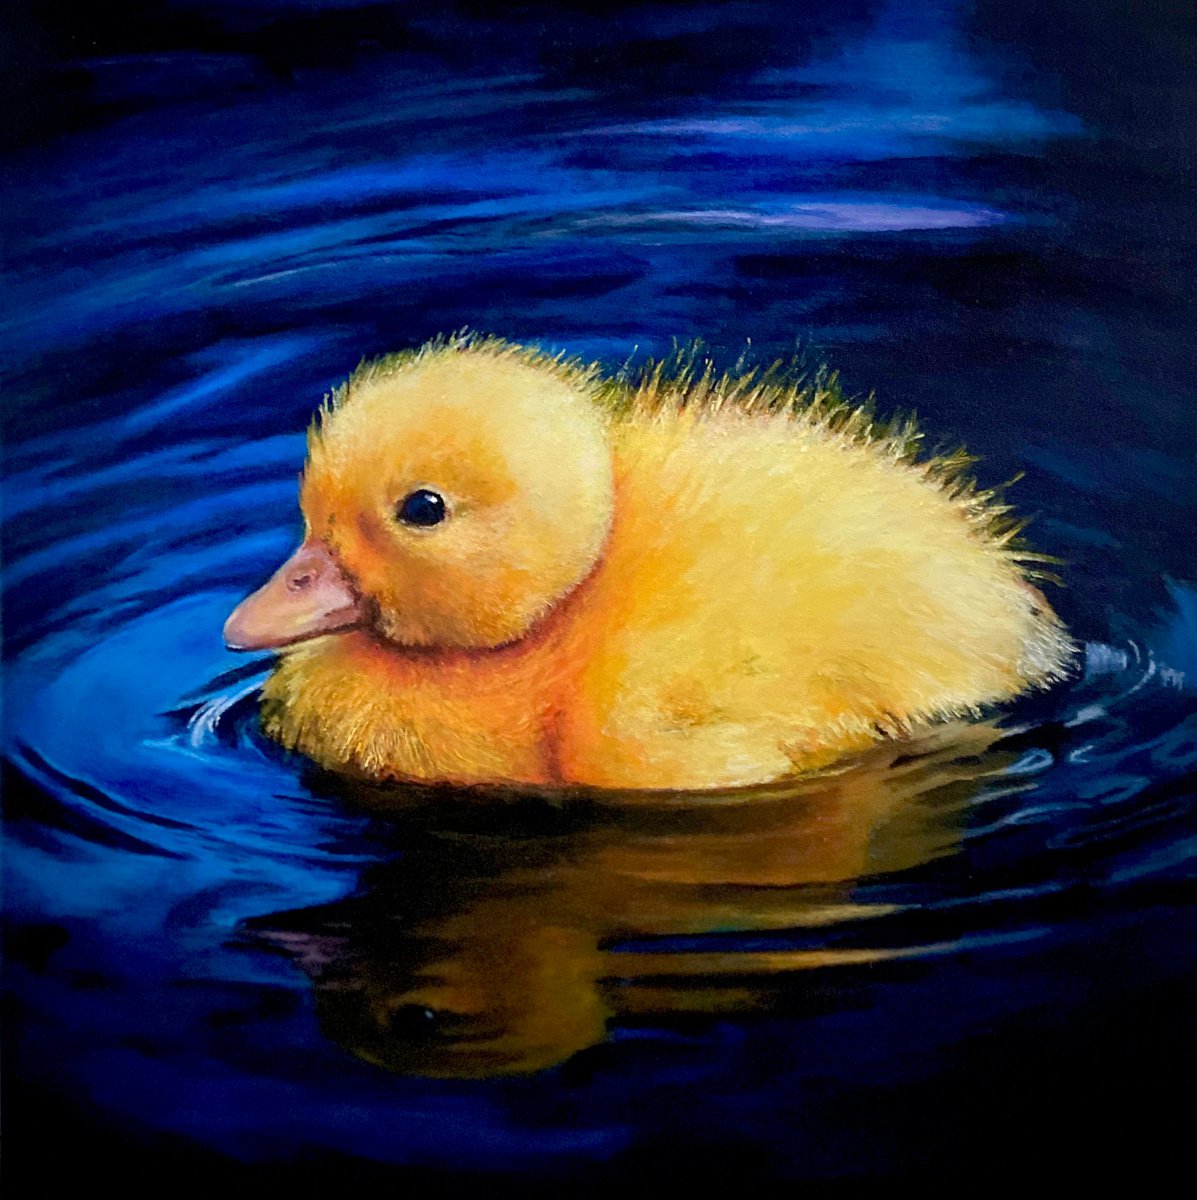 Ducklings reflection by Paul Hardern